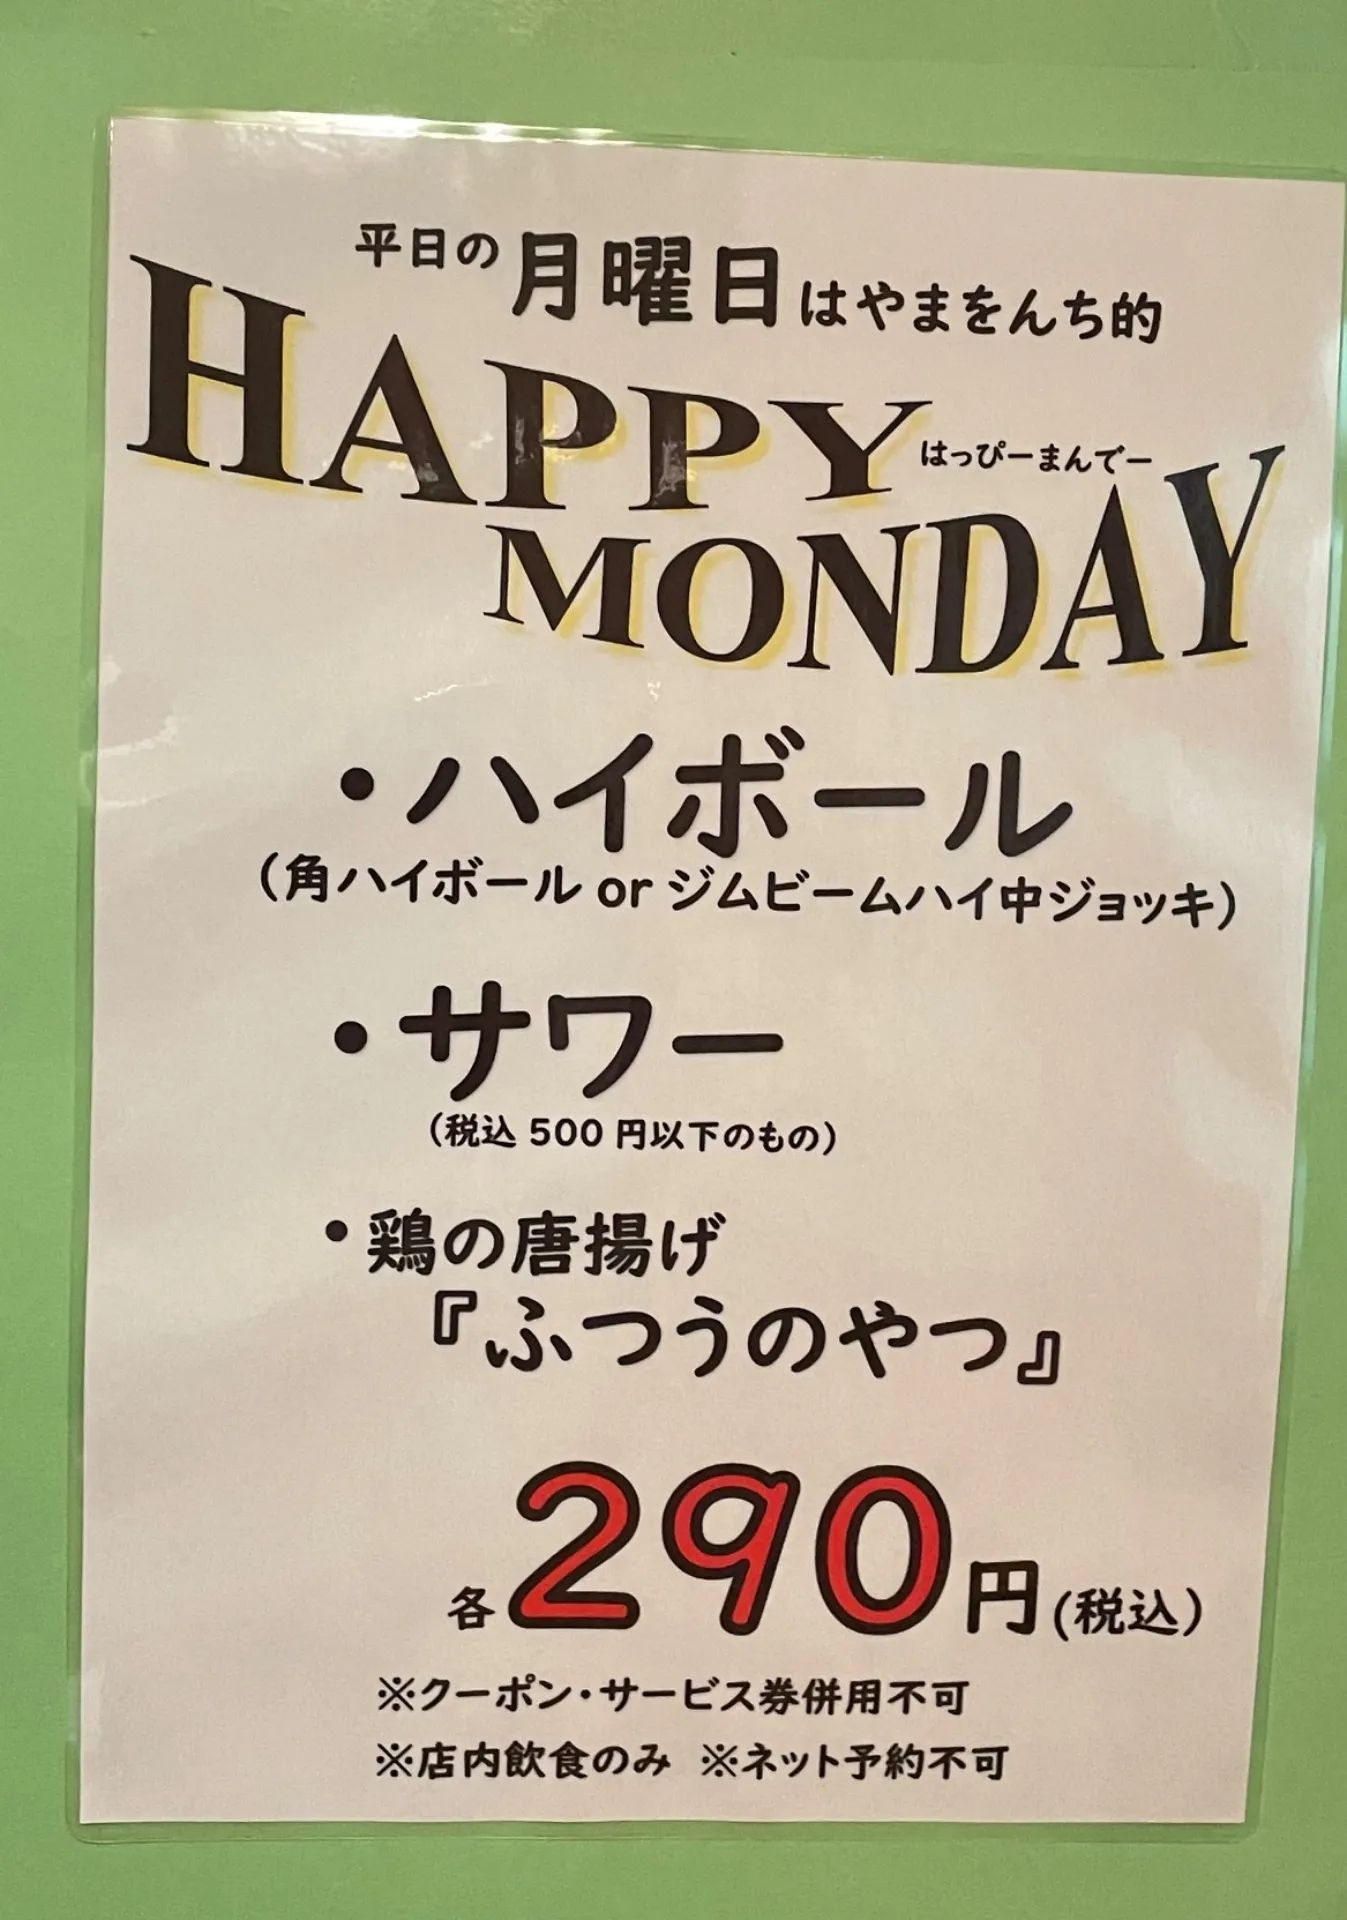 【吉祥寺】NEW‼平日月曜日は『HAPPY MONDAY』【居酒屋】#23